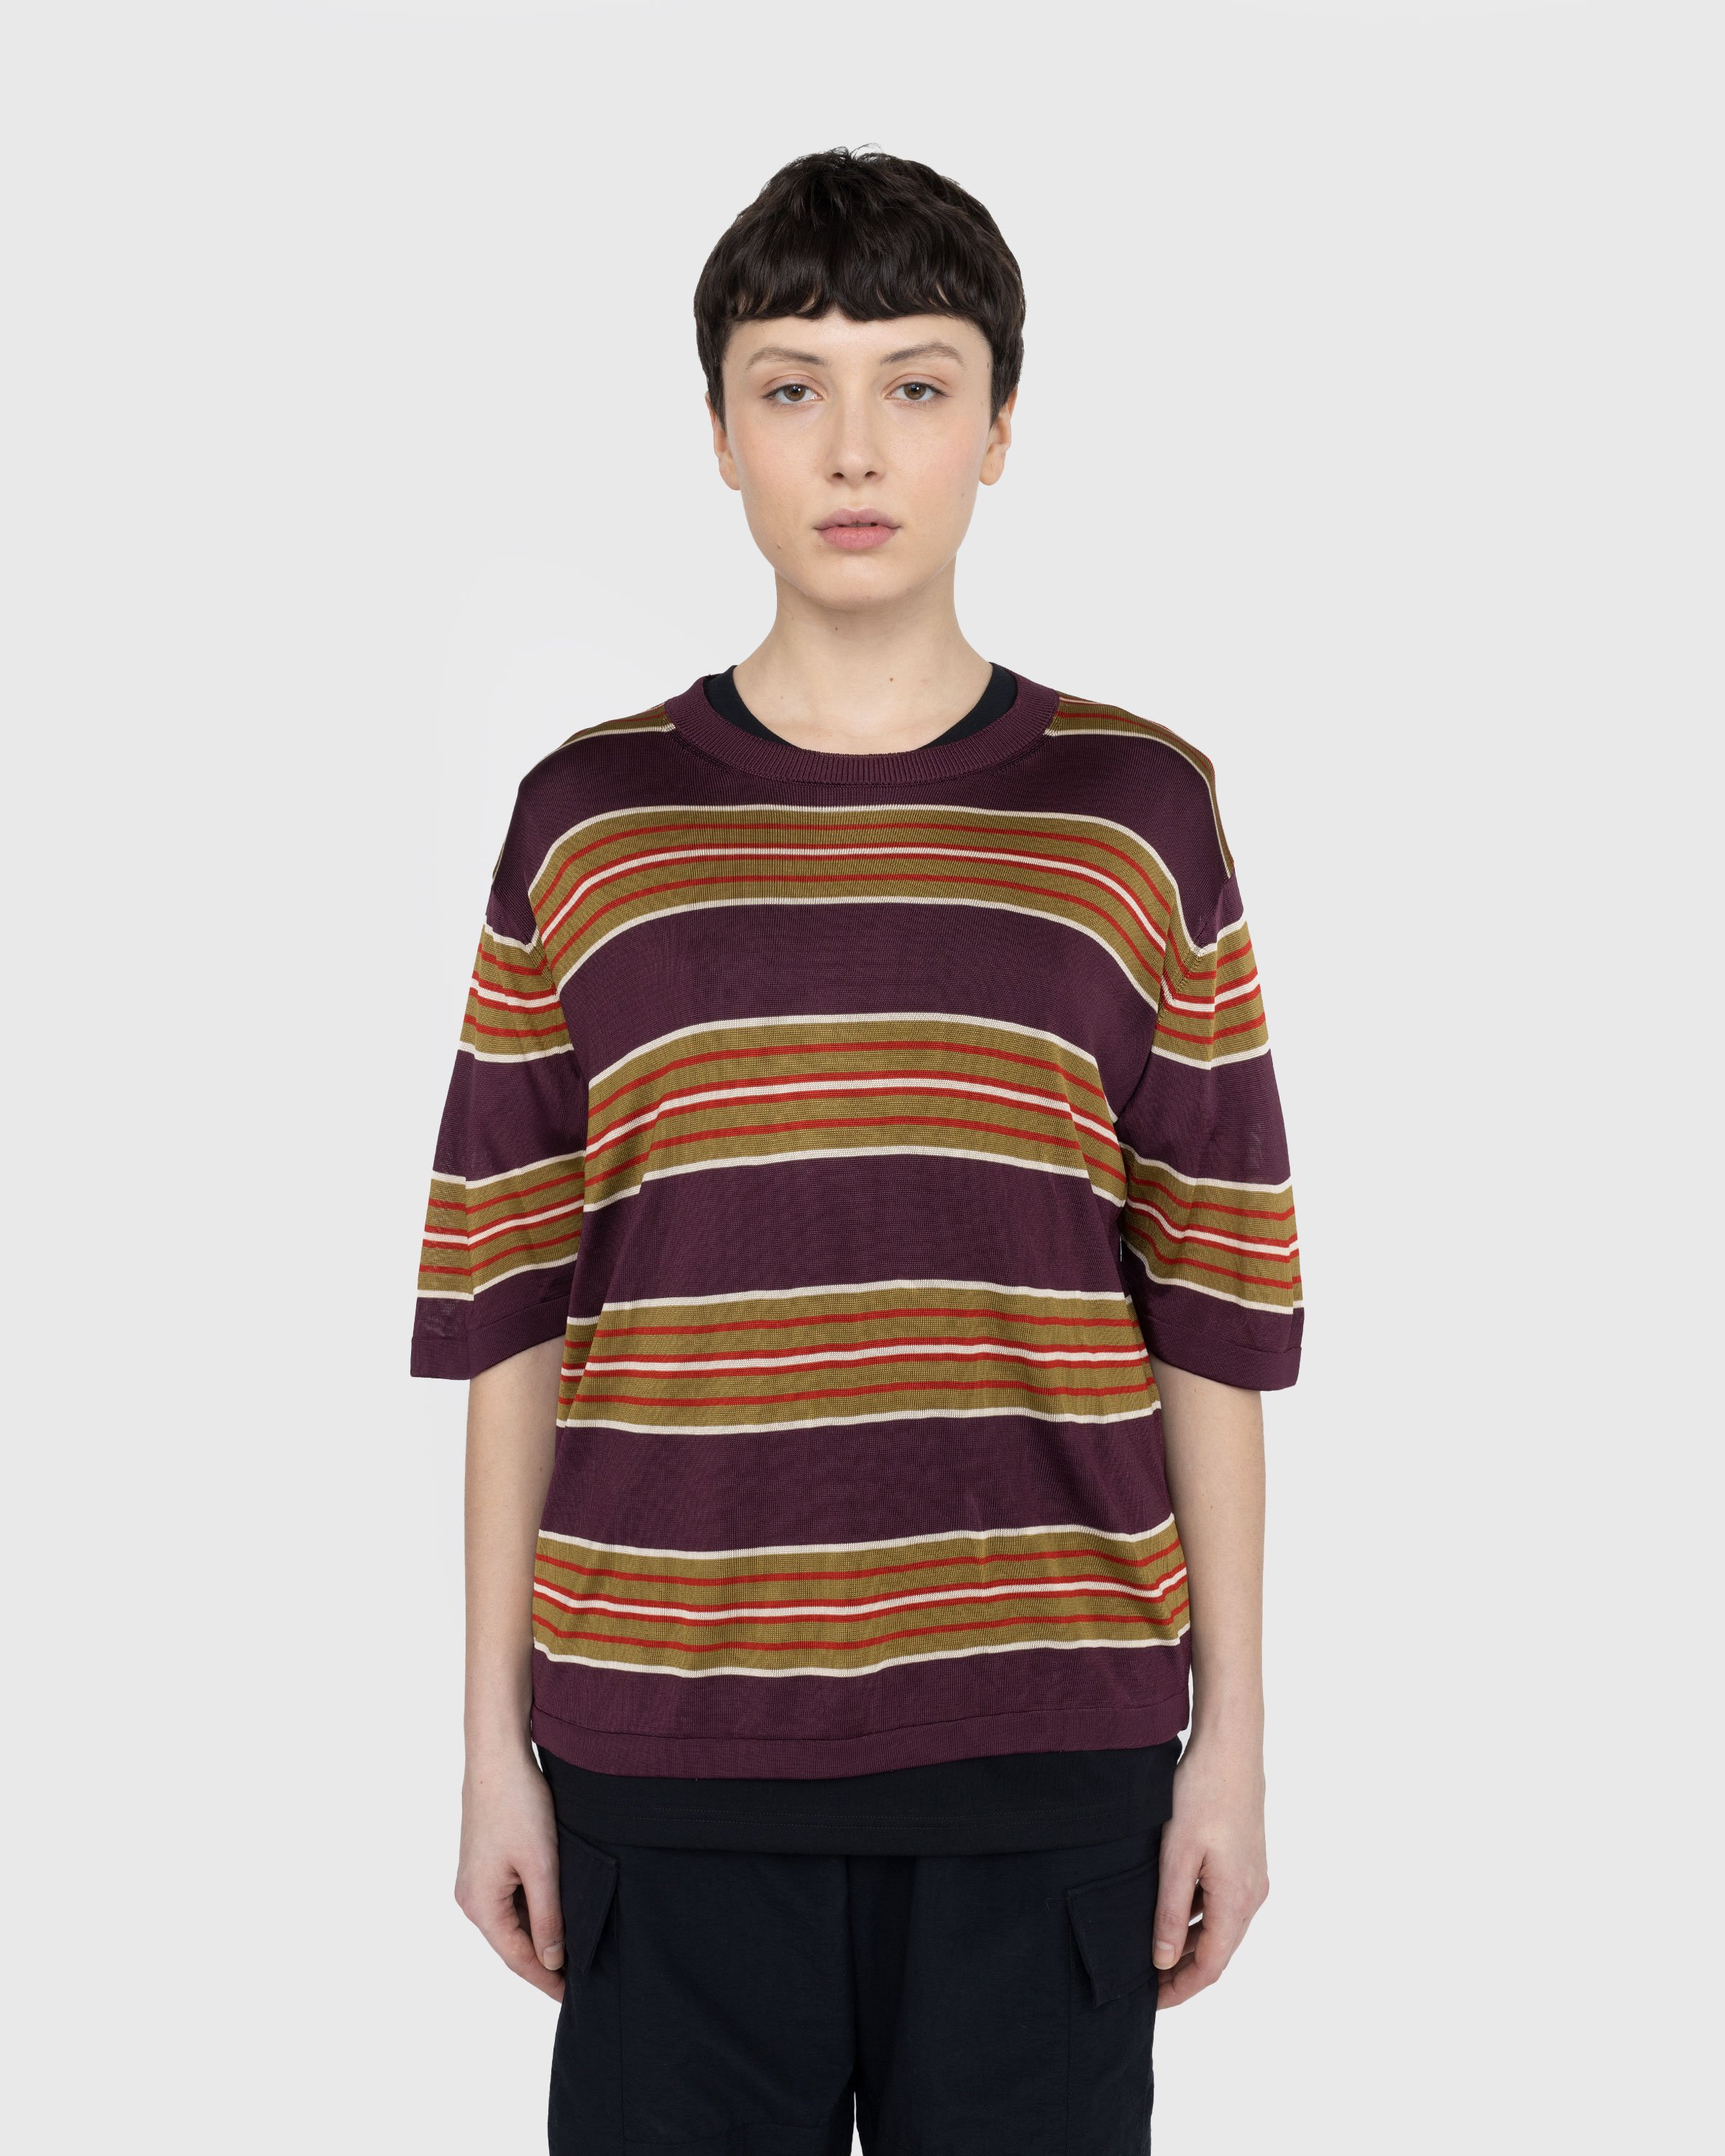 Dries van Noten - Mias Knit T-Shirt Burgundy - Clothing - Red - Image 3